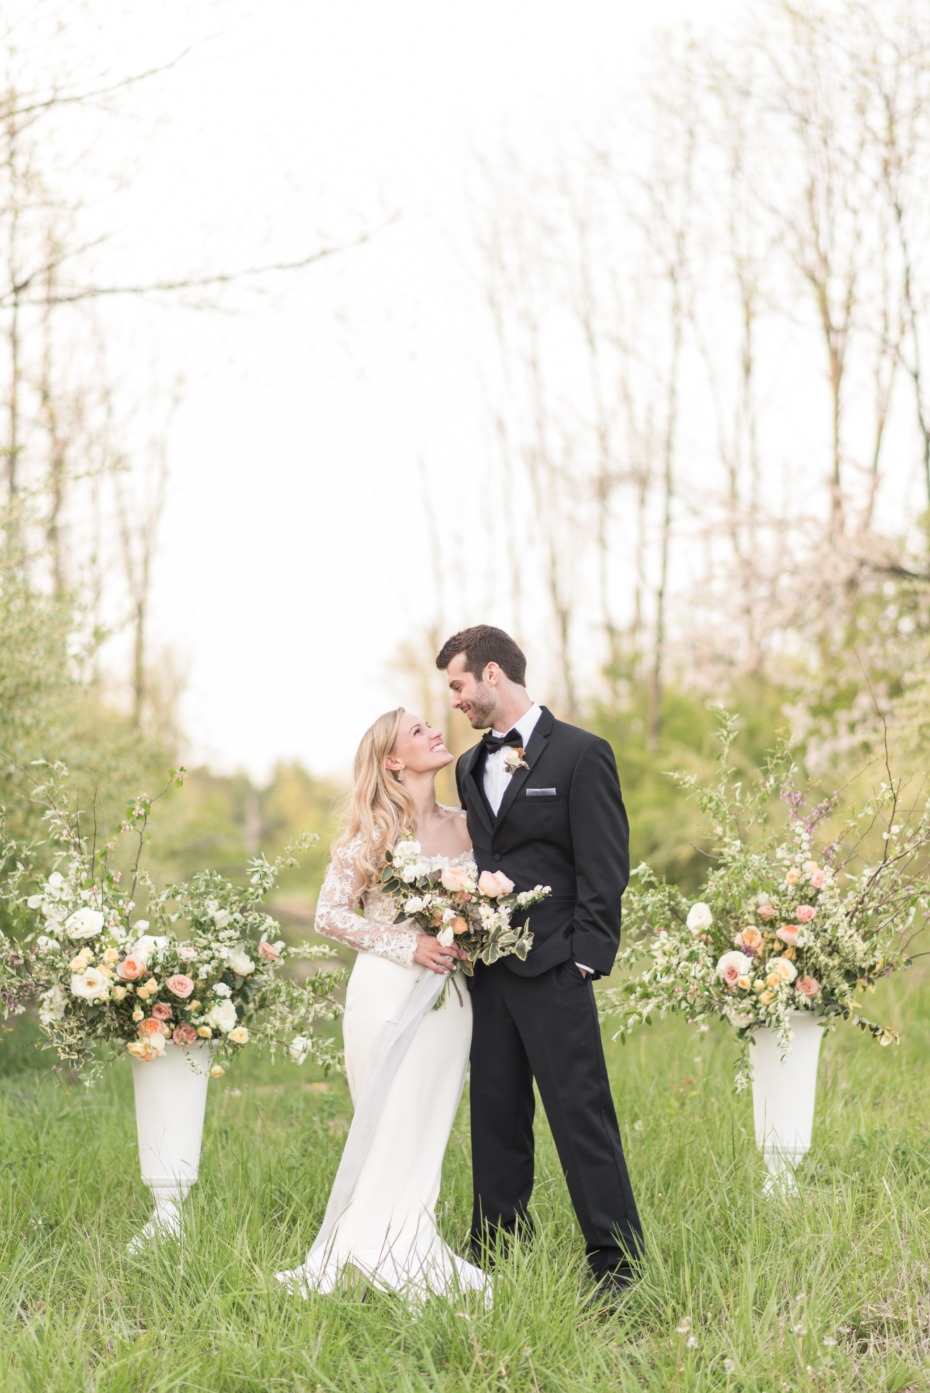 simple and elegant outdoor wedding ceremony